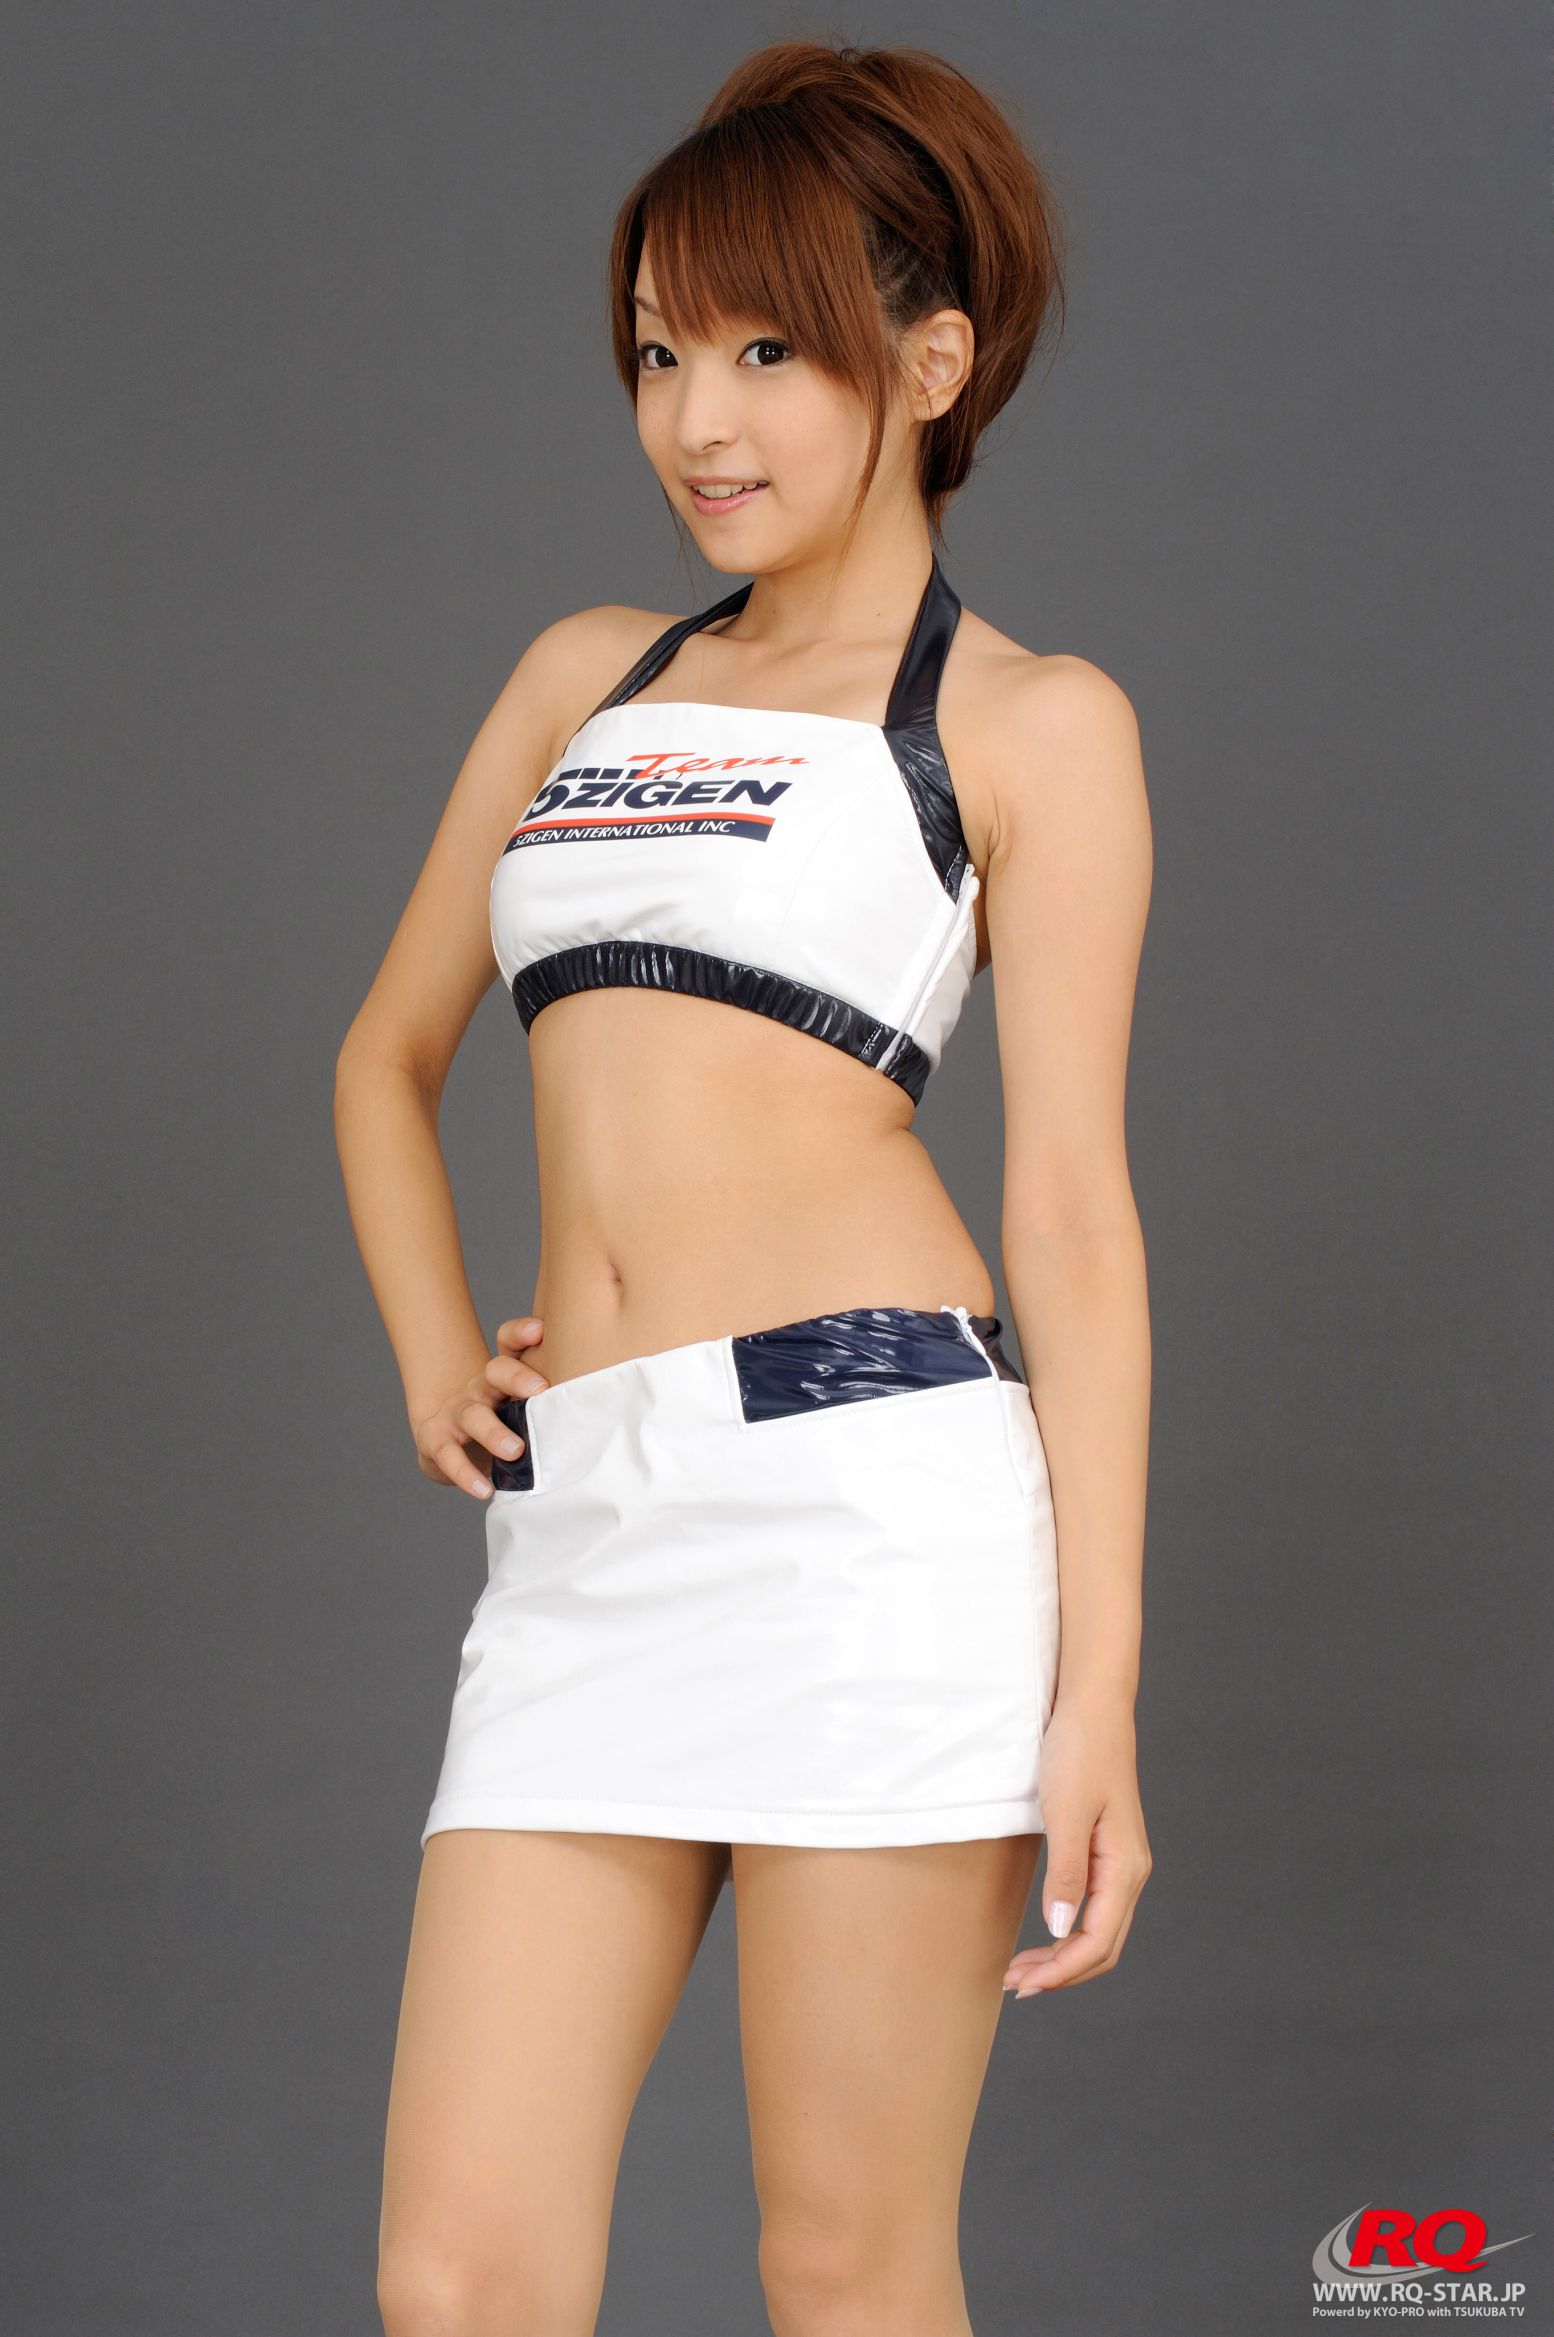 [RQ-STAR] NO.00080 Mio Aoki 青木未央 Race Queen – 2008 5Zigen  写真集/(99P)